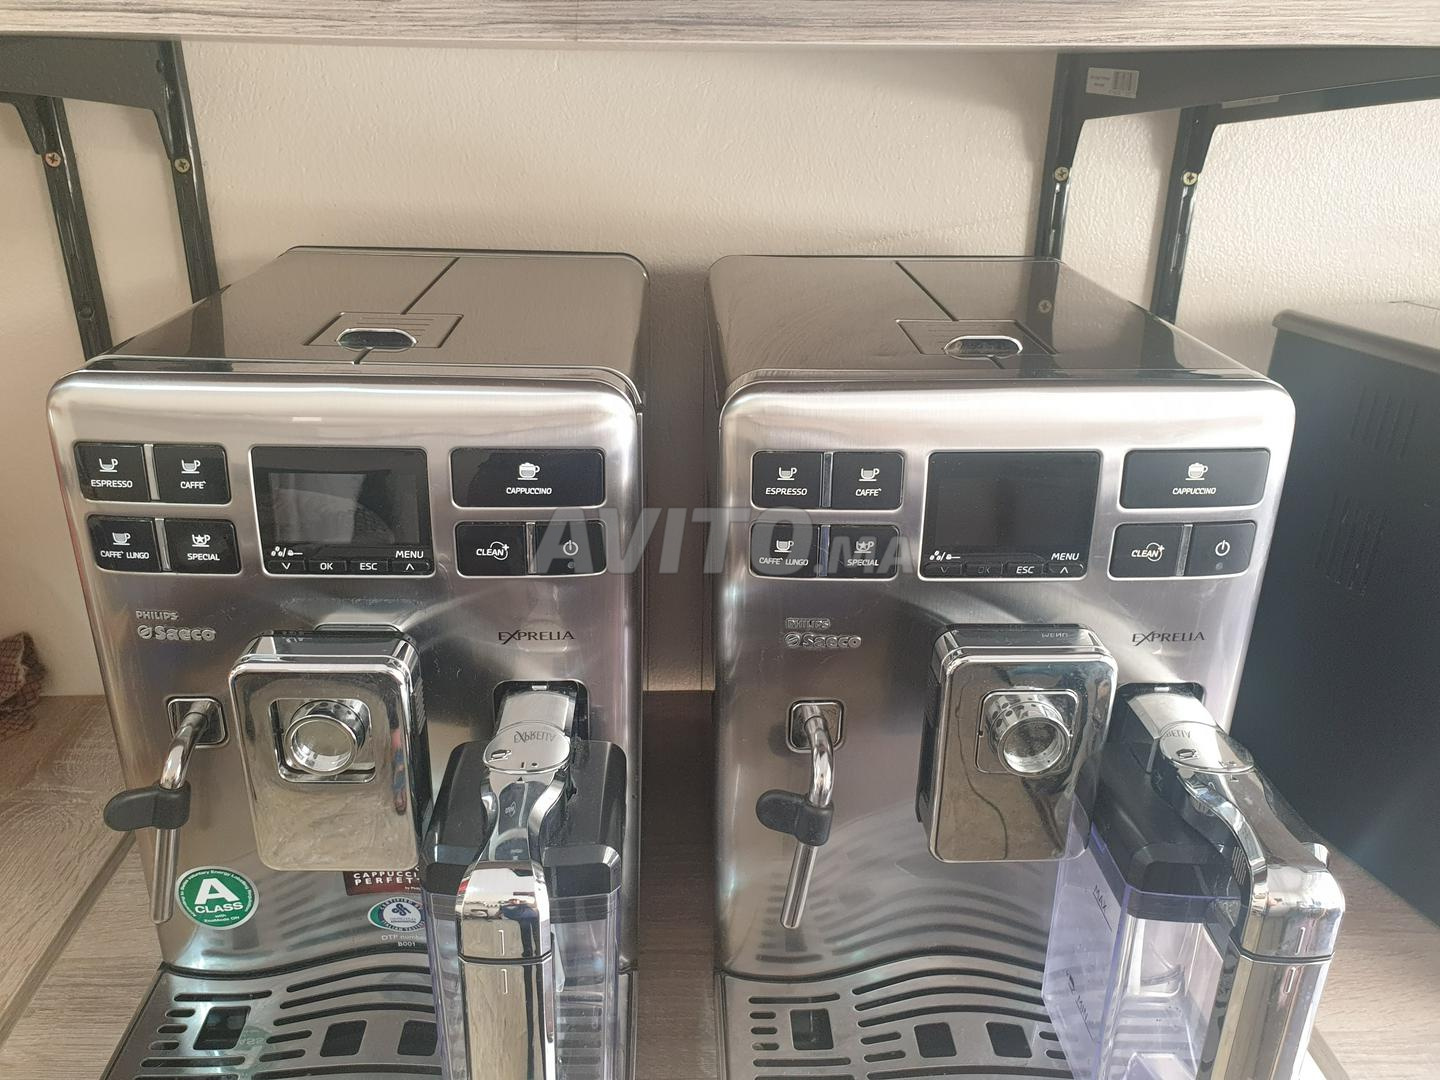 Des machines a cafe automatique saeco exprelia - 2